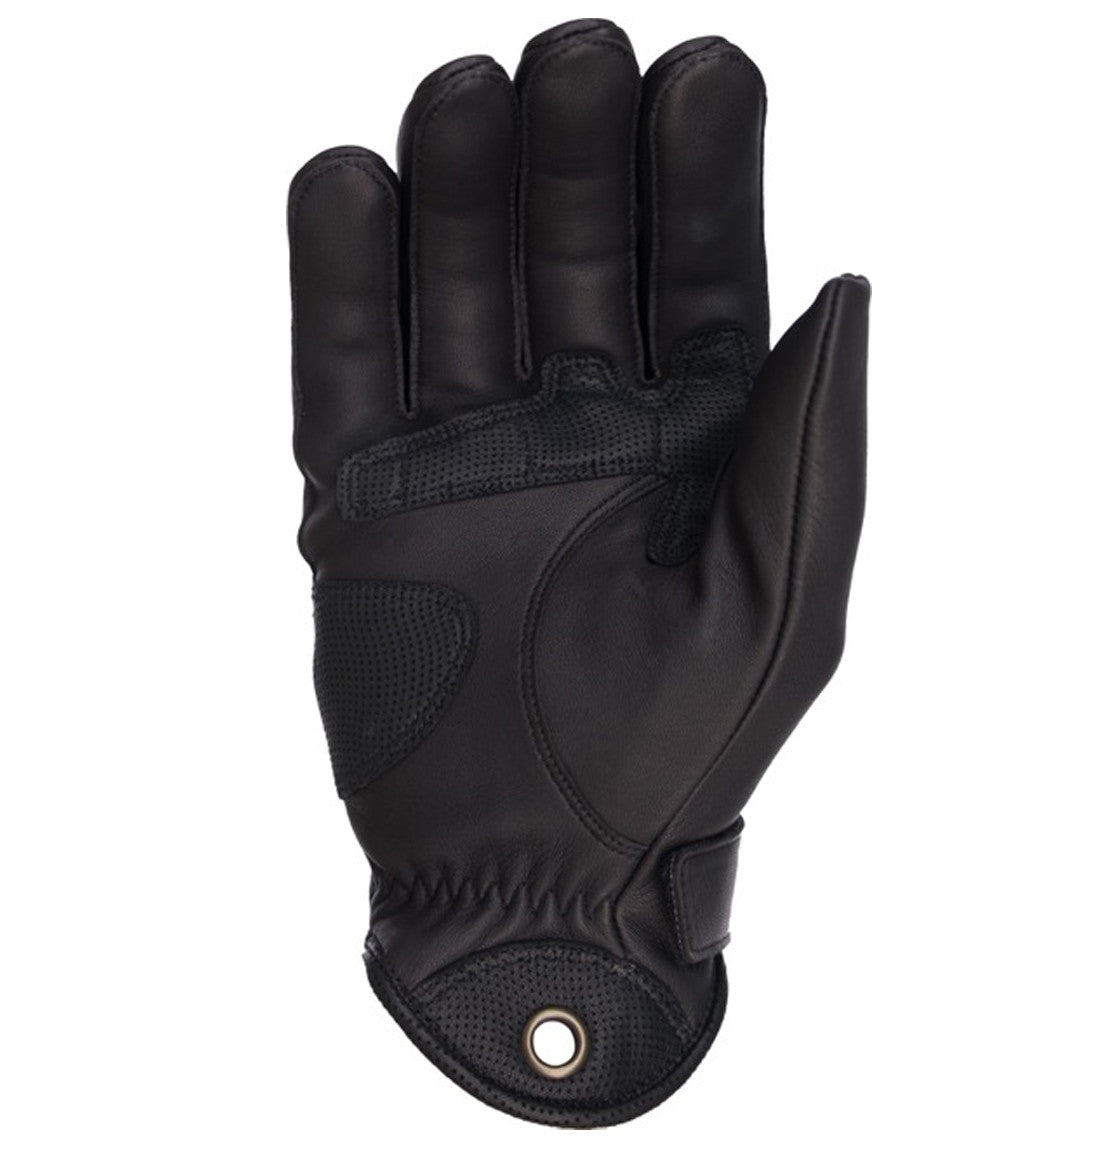 ESKA silky black leather motorcycle glove